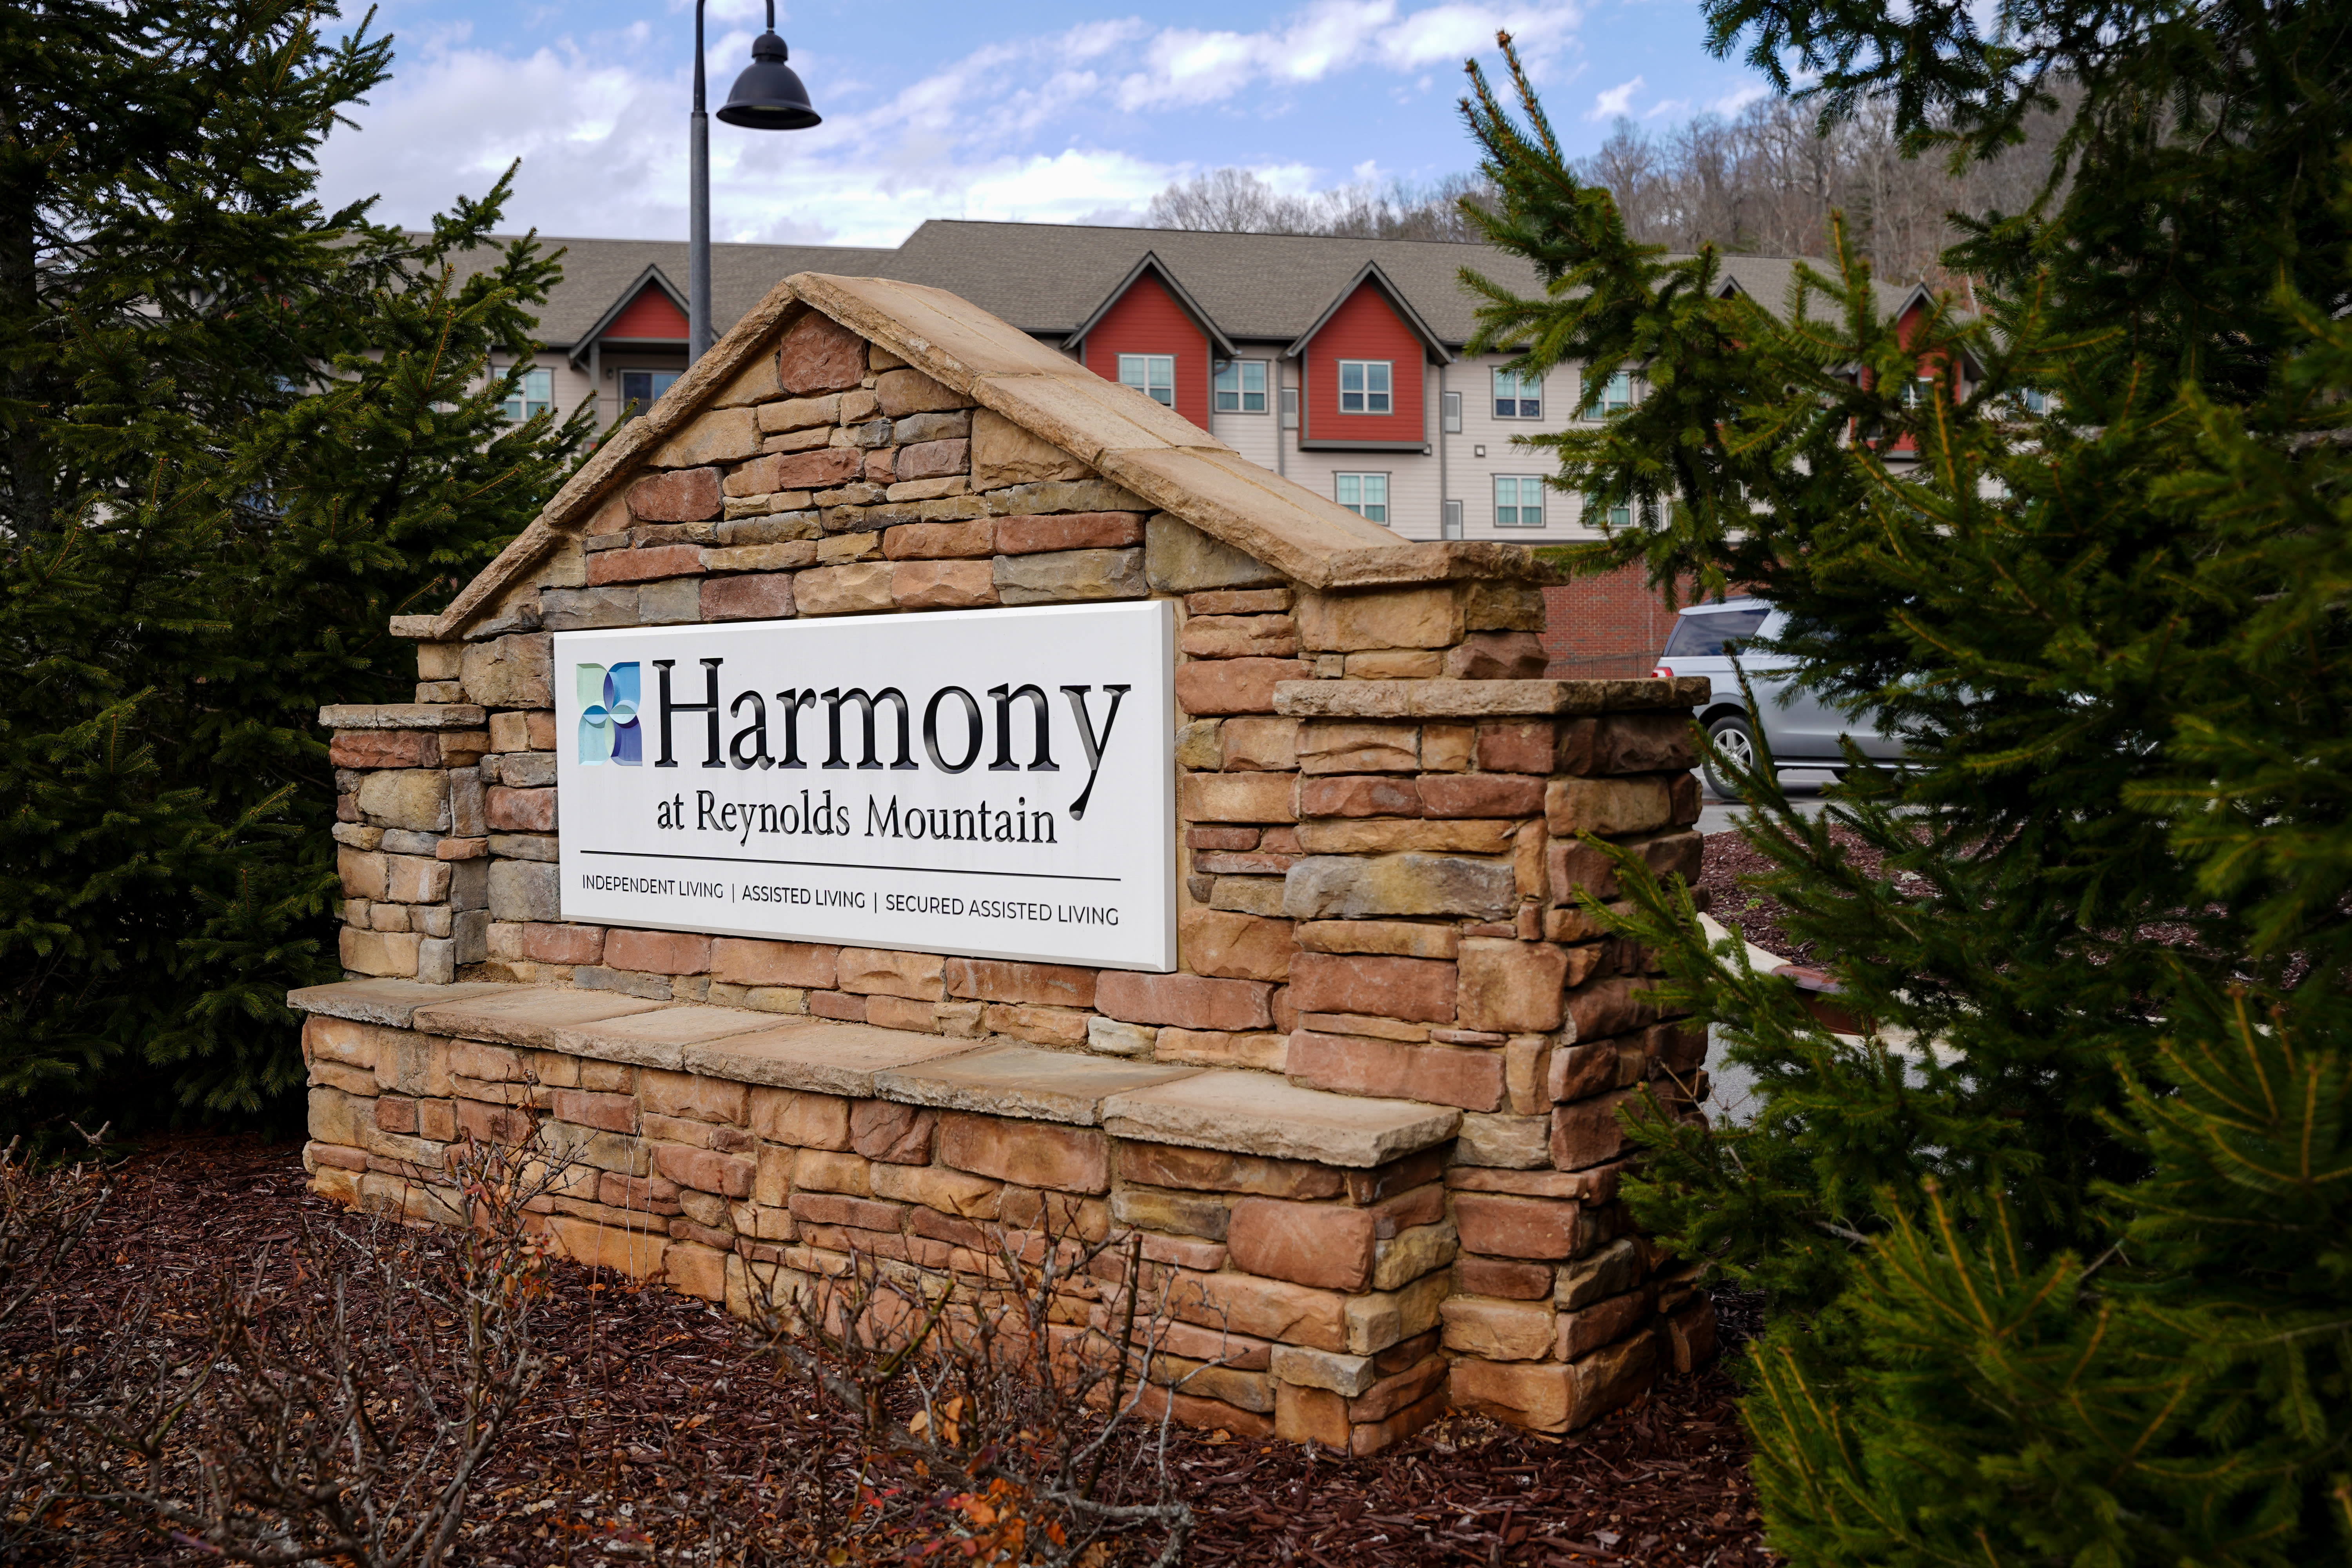 Main signage at Harmony at Reynolds Mountain in Asheville, North Carolina